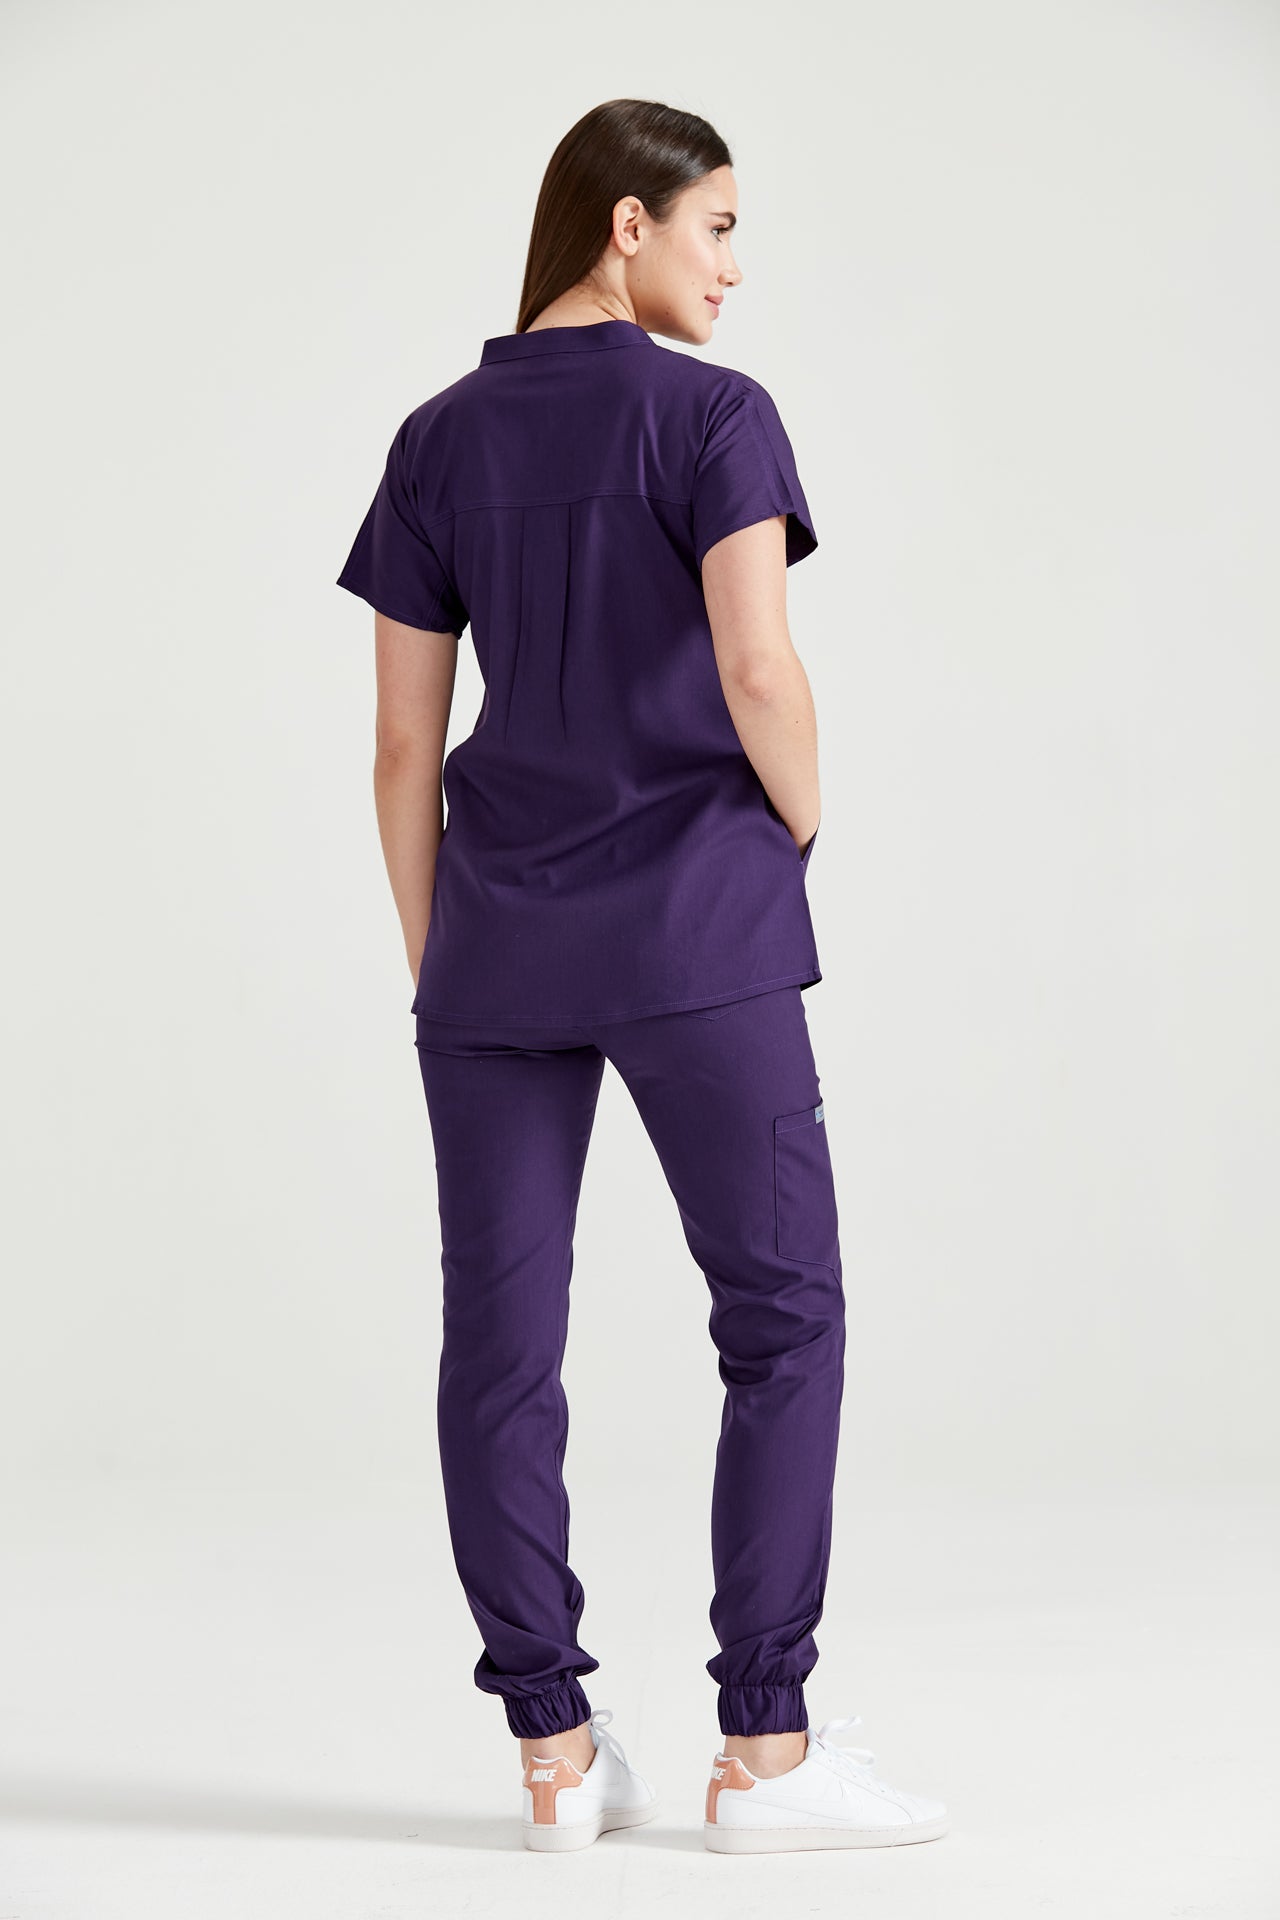 Asistenta medicala imbracata in costum medical mov, femei, Purple, vedere din spate